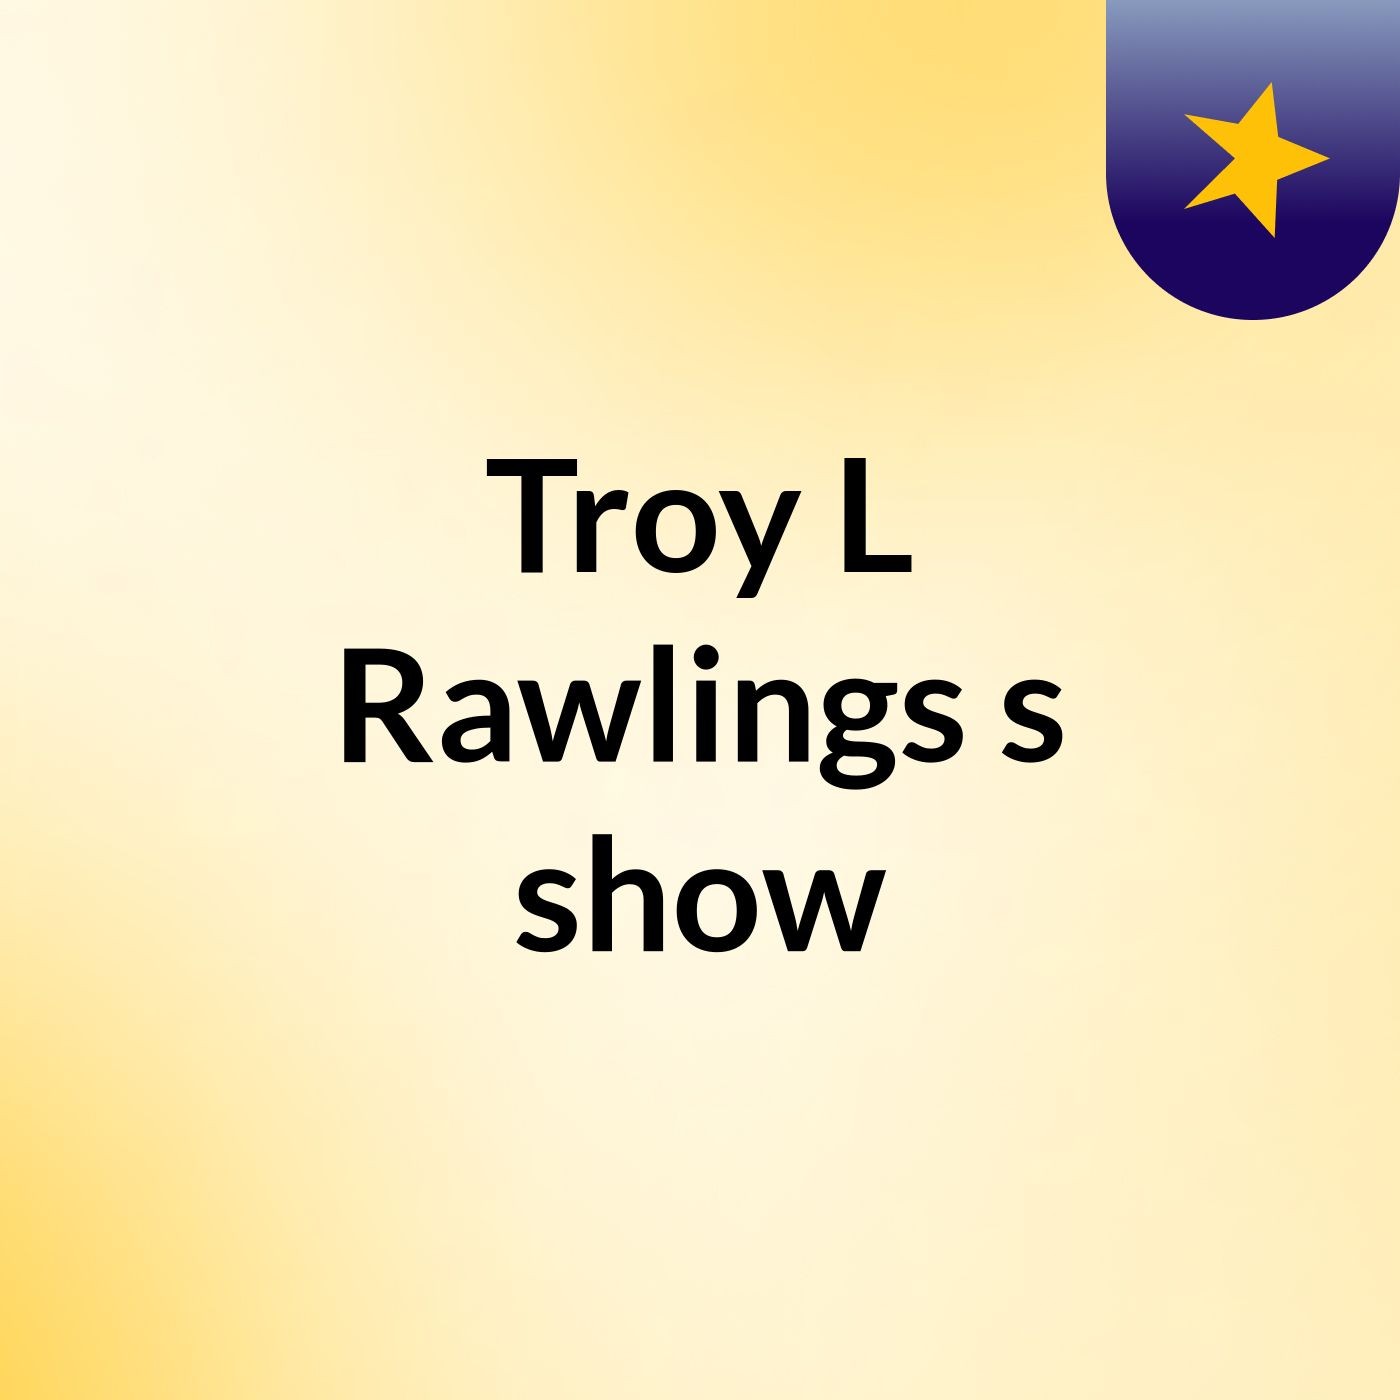 Troy L Rawlings's show